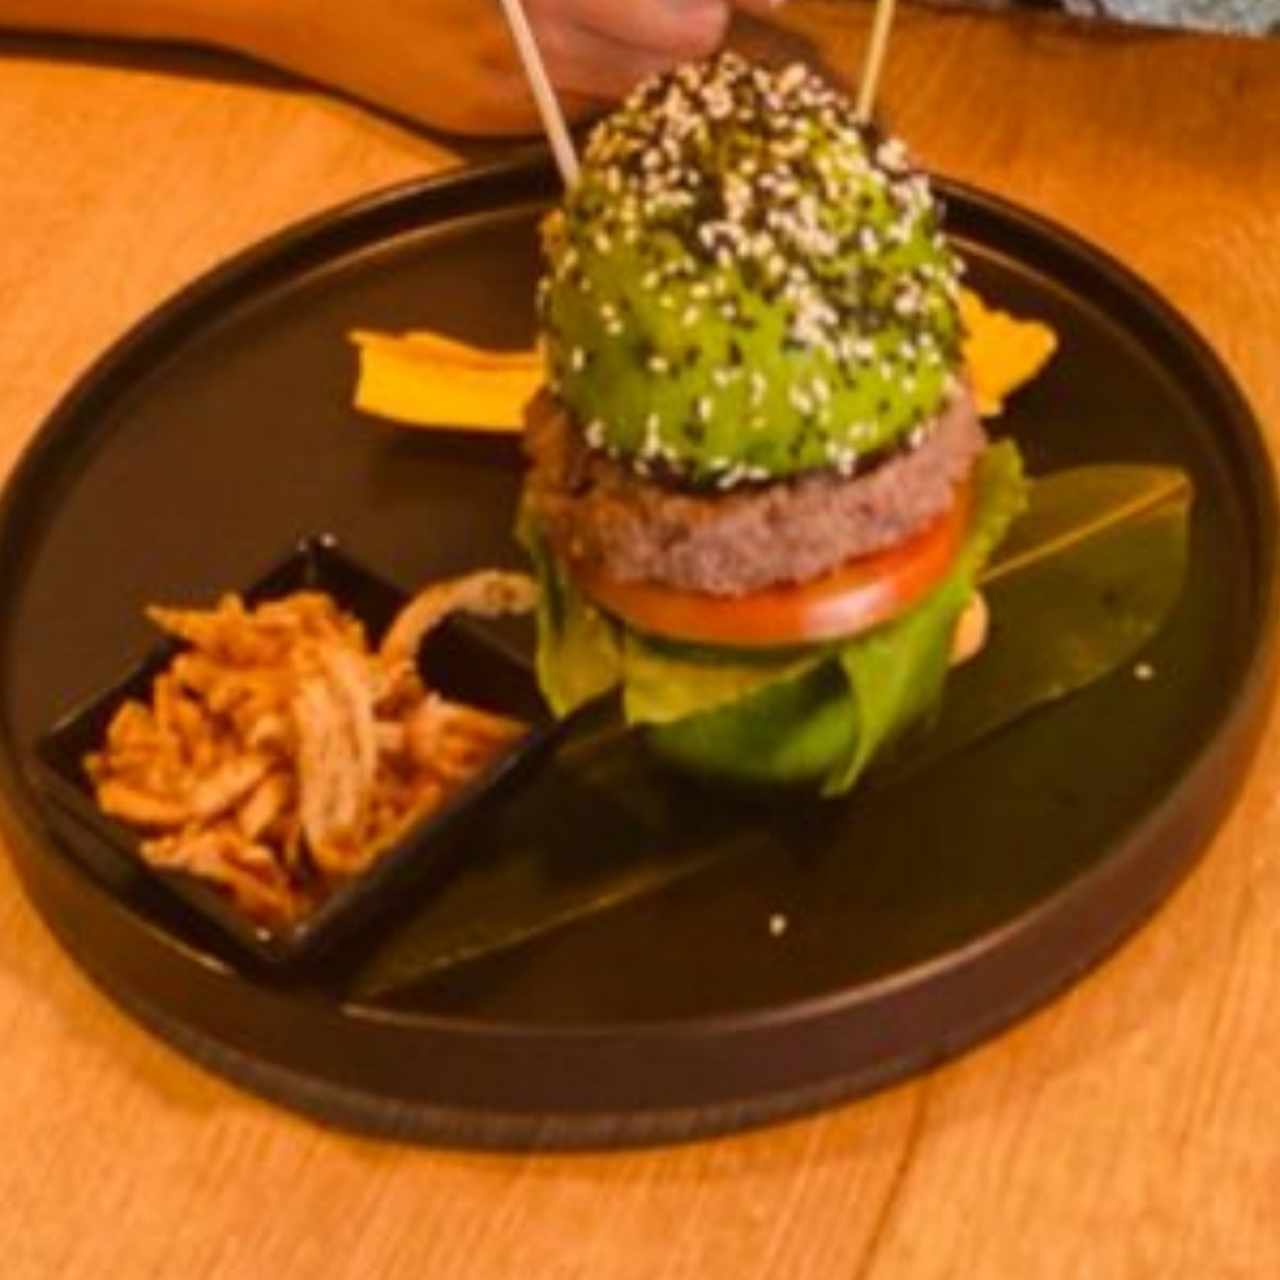 Avocado burger